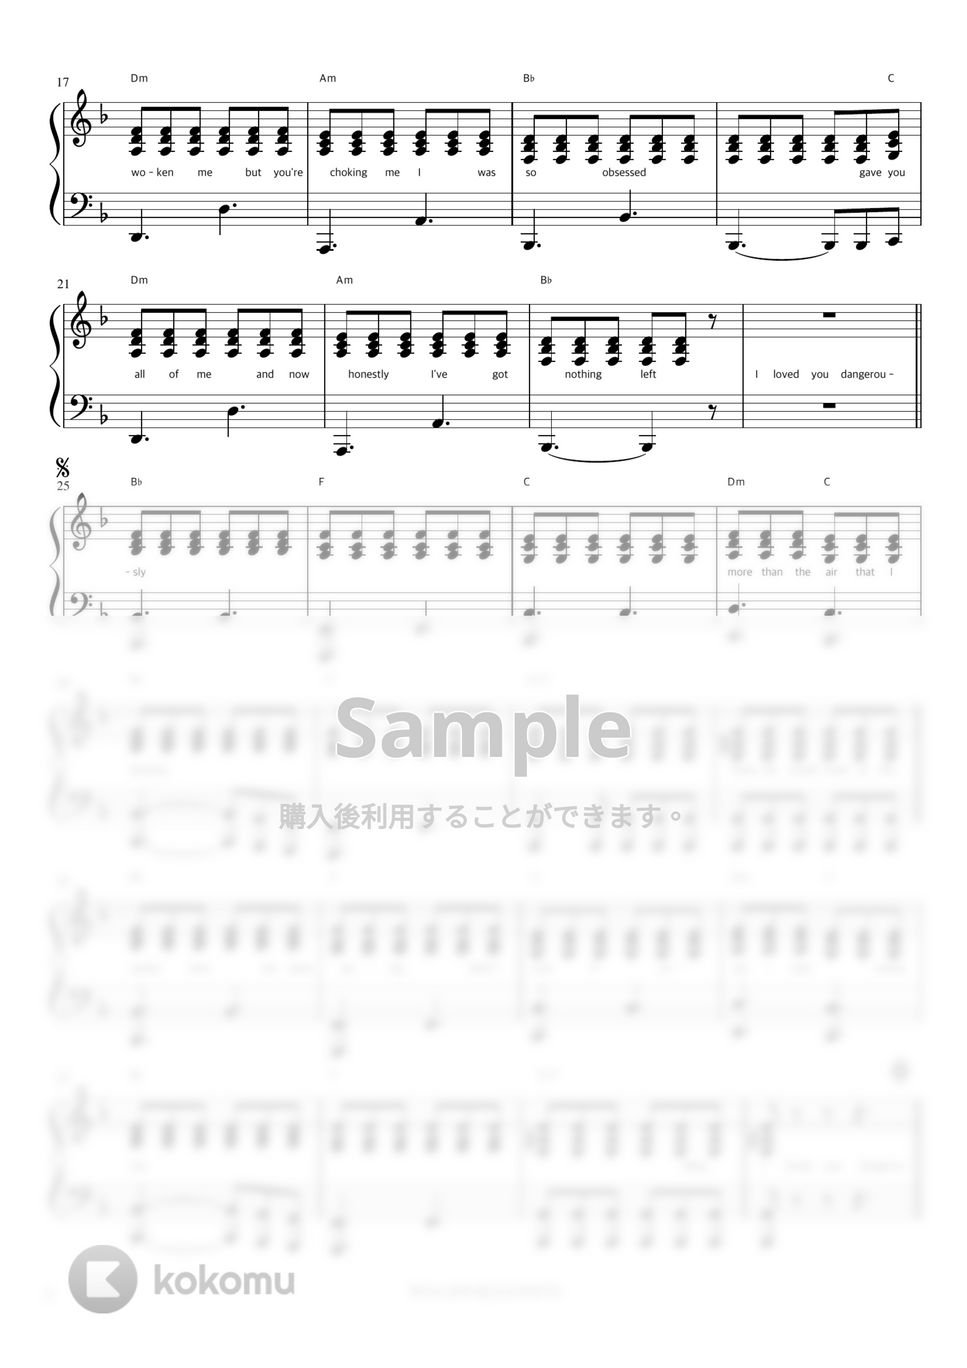 Charlie Puth - Dangerously (伴奏楽譜) by 피아노정류장